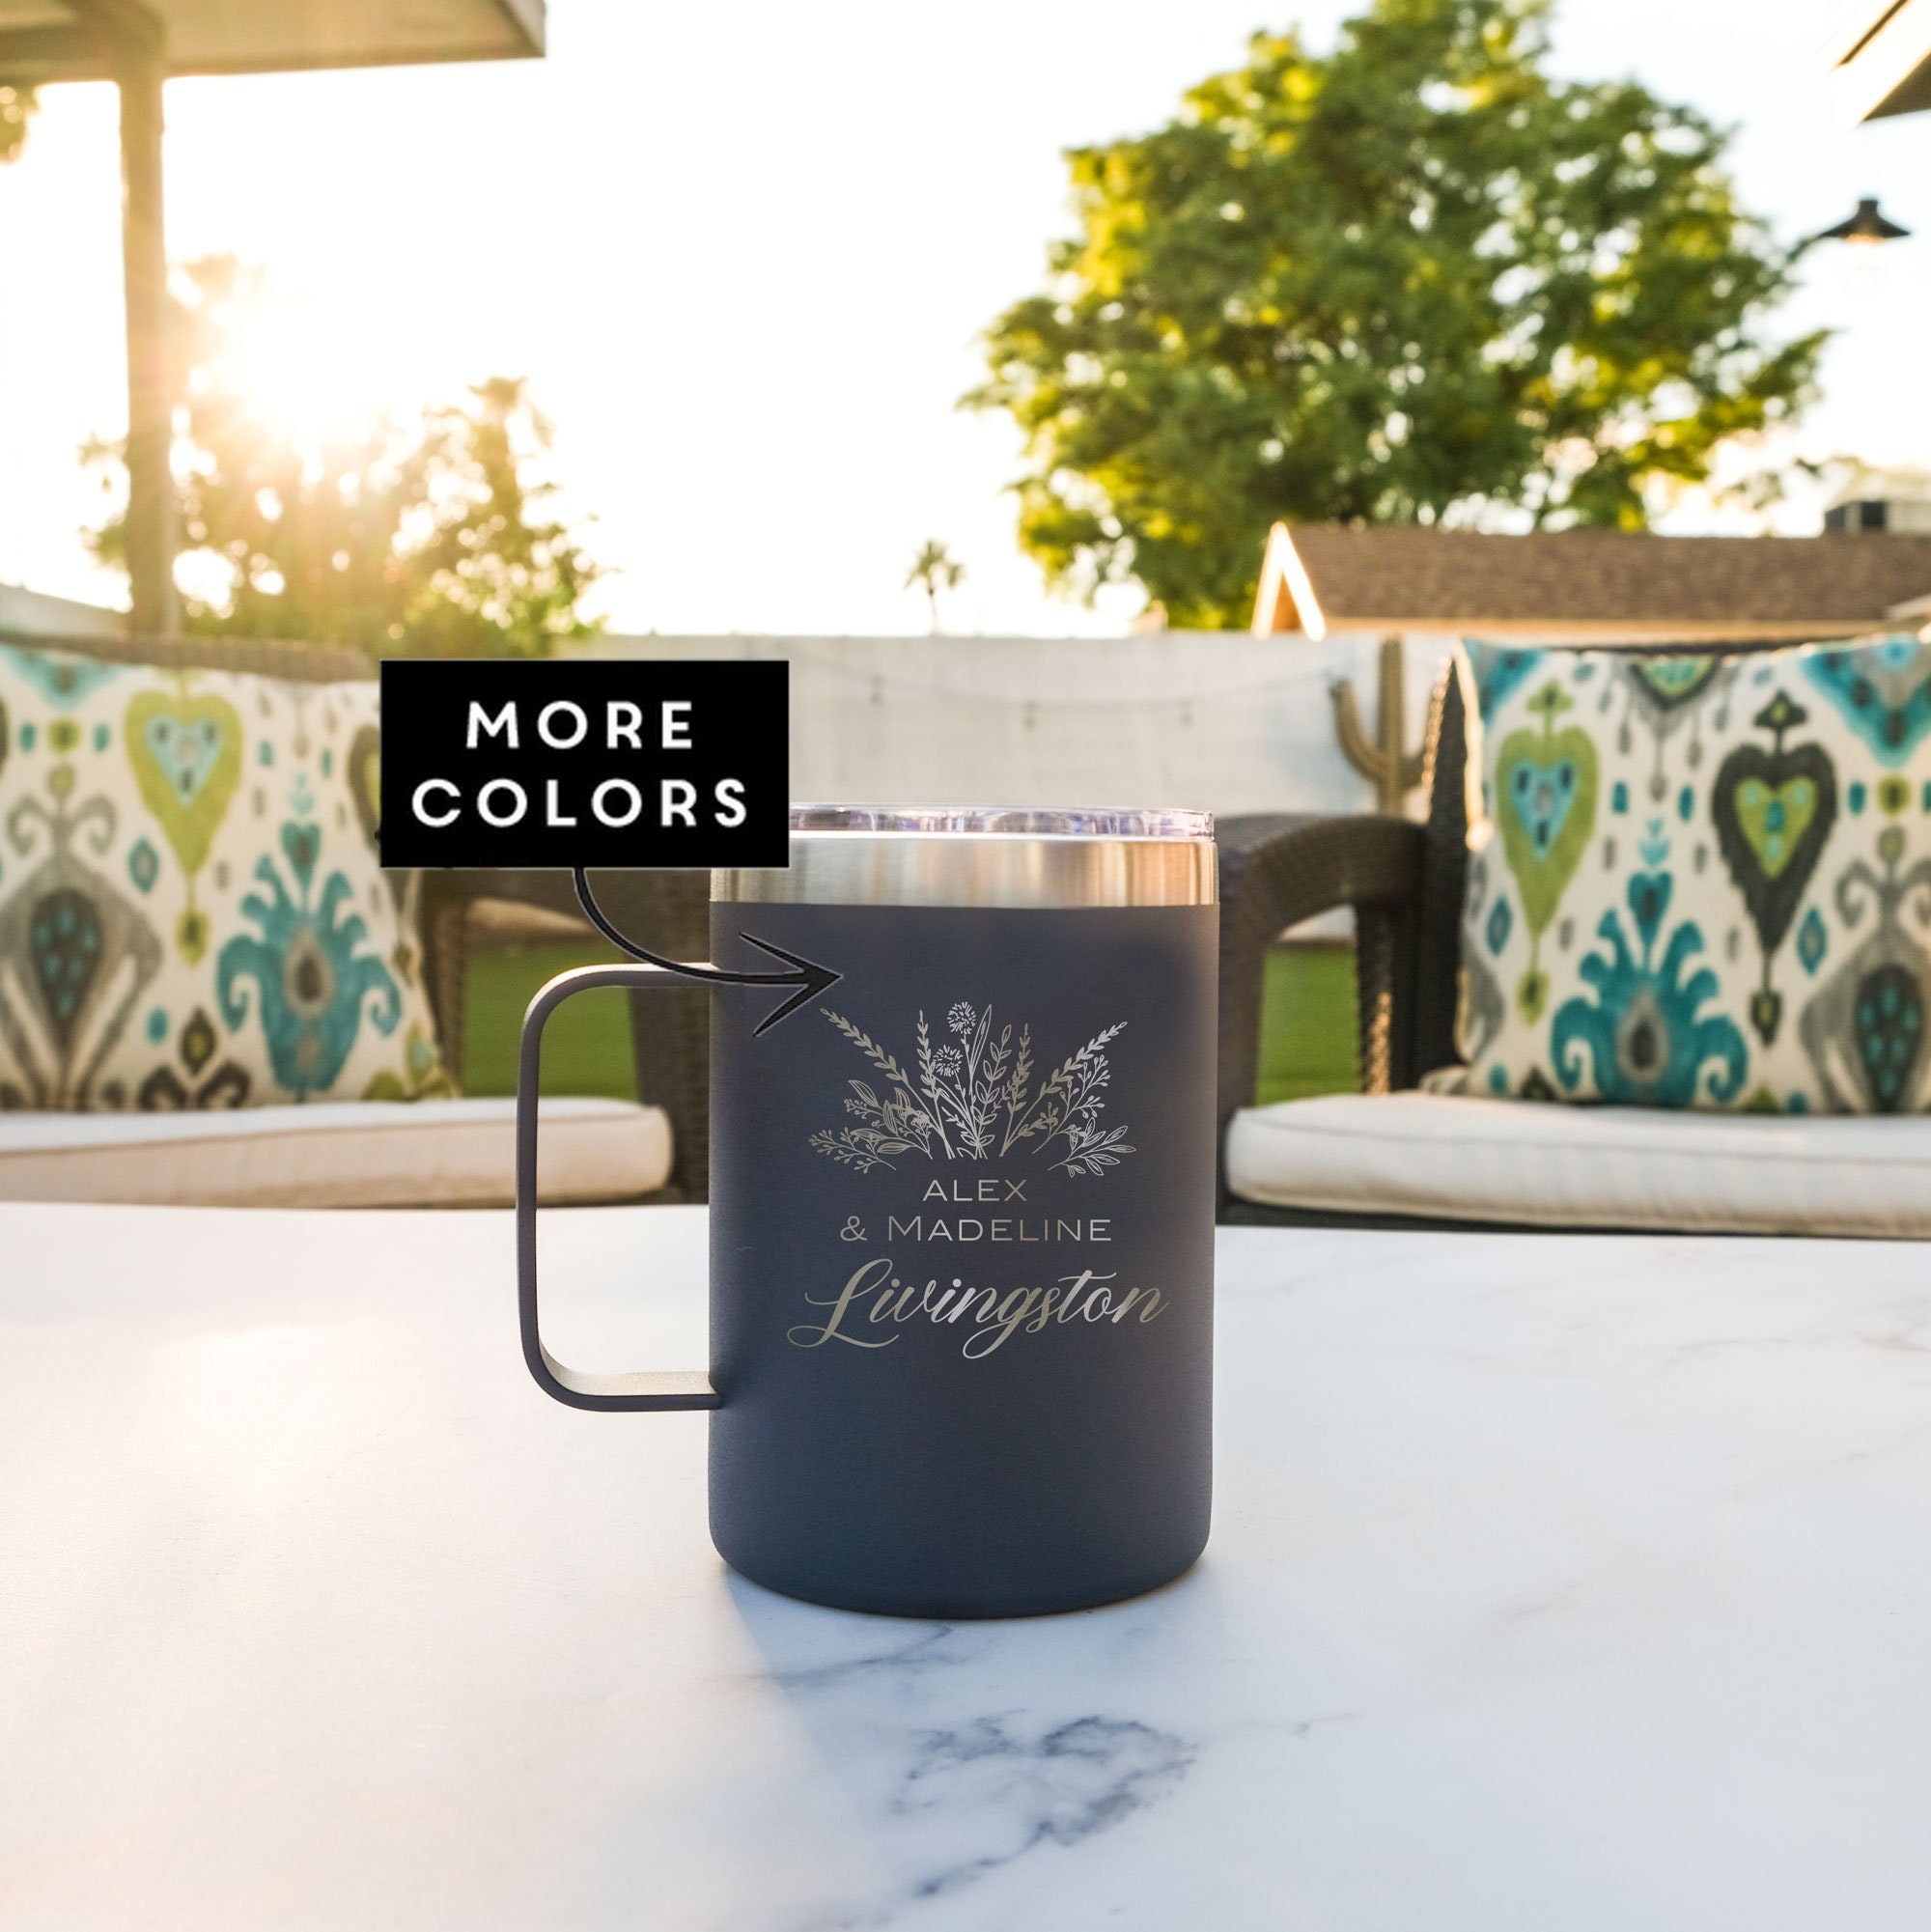 Personalized Anniversary Mugs Leakproof Insulated Mug Custom Travel Mug  Engraved Wedding Gift Coffee Mug With Lid HPM24 